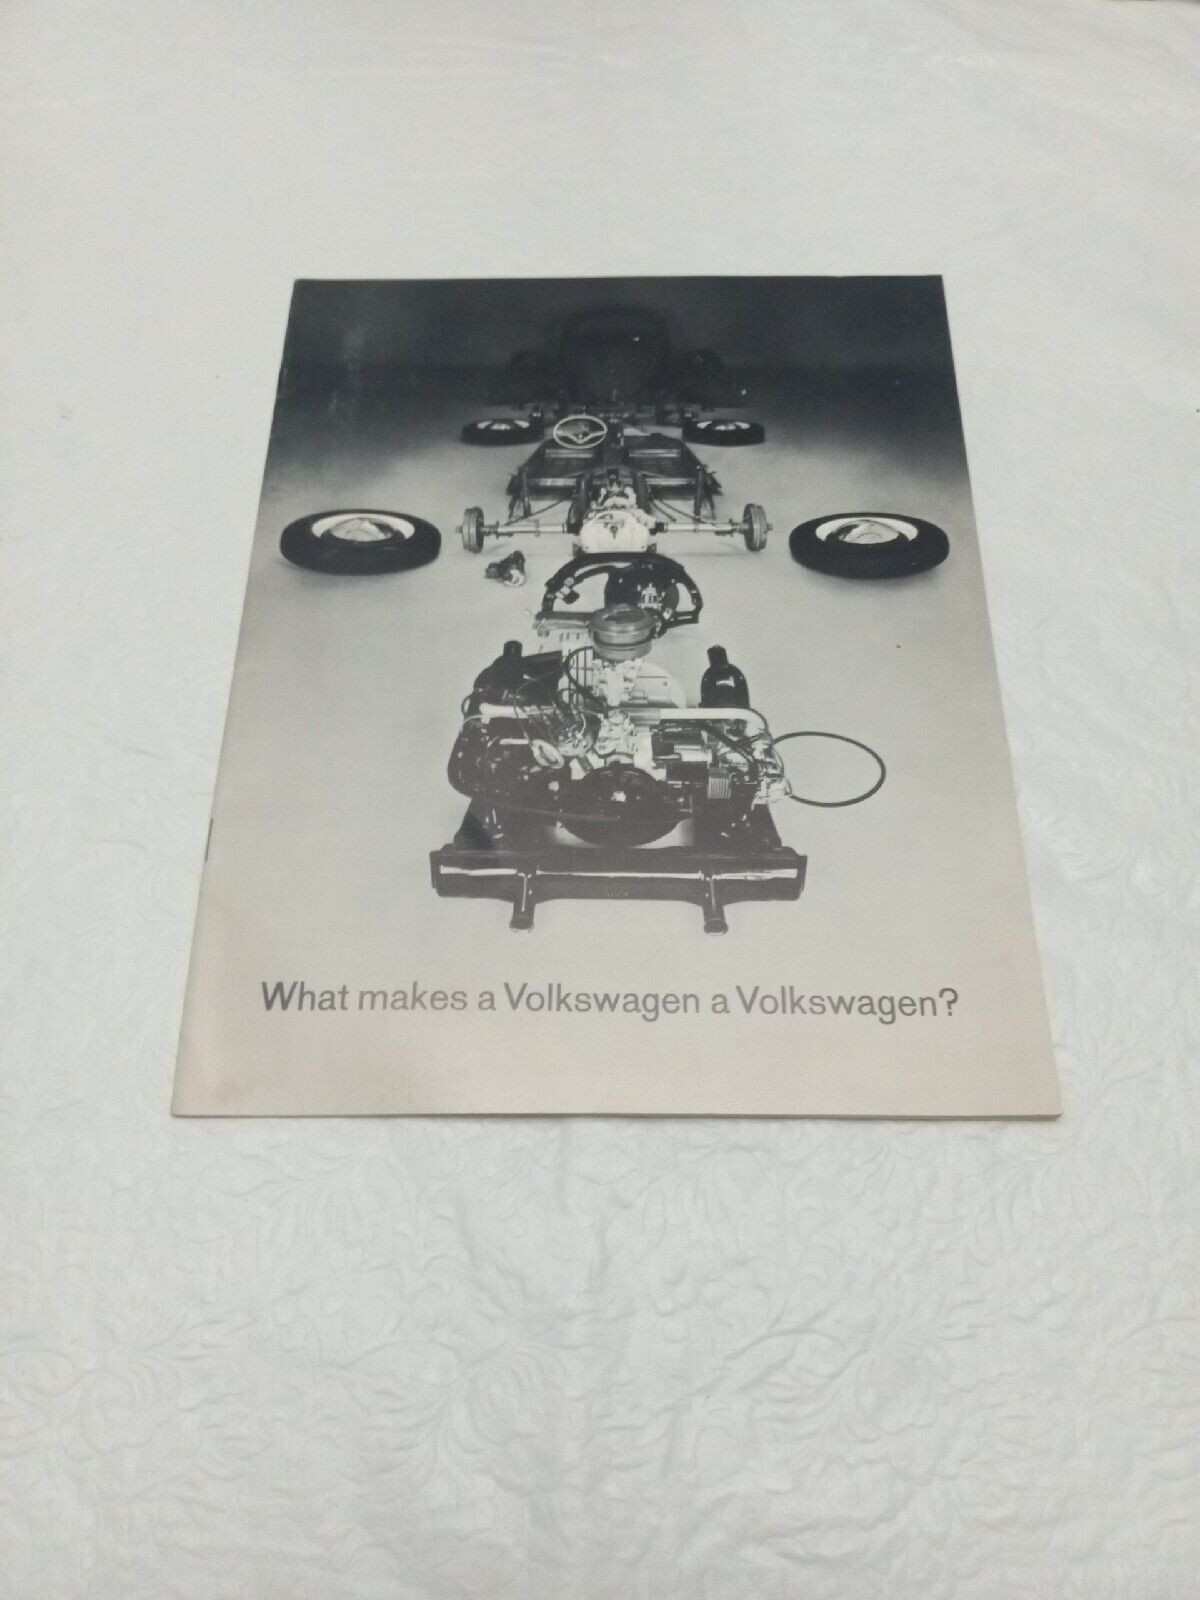 1964 Volkswagen Car Auto Brochure What Makes A Volkswagen? B&W Fc2